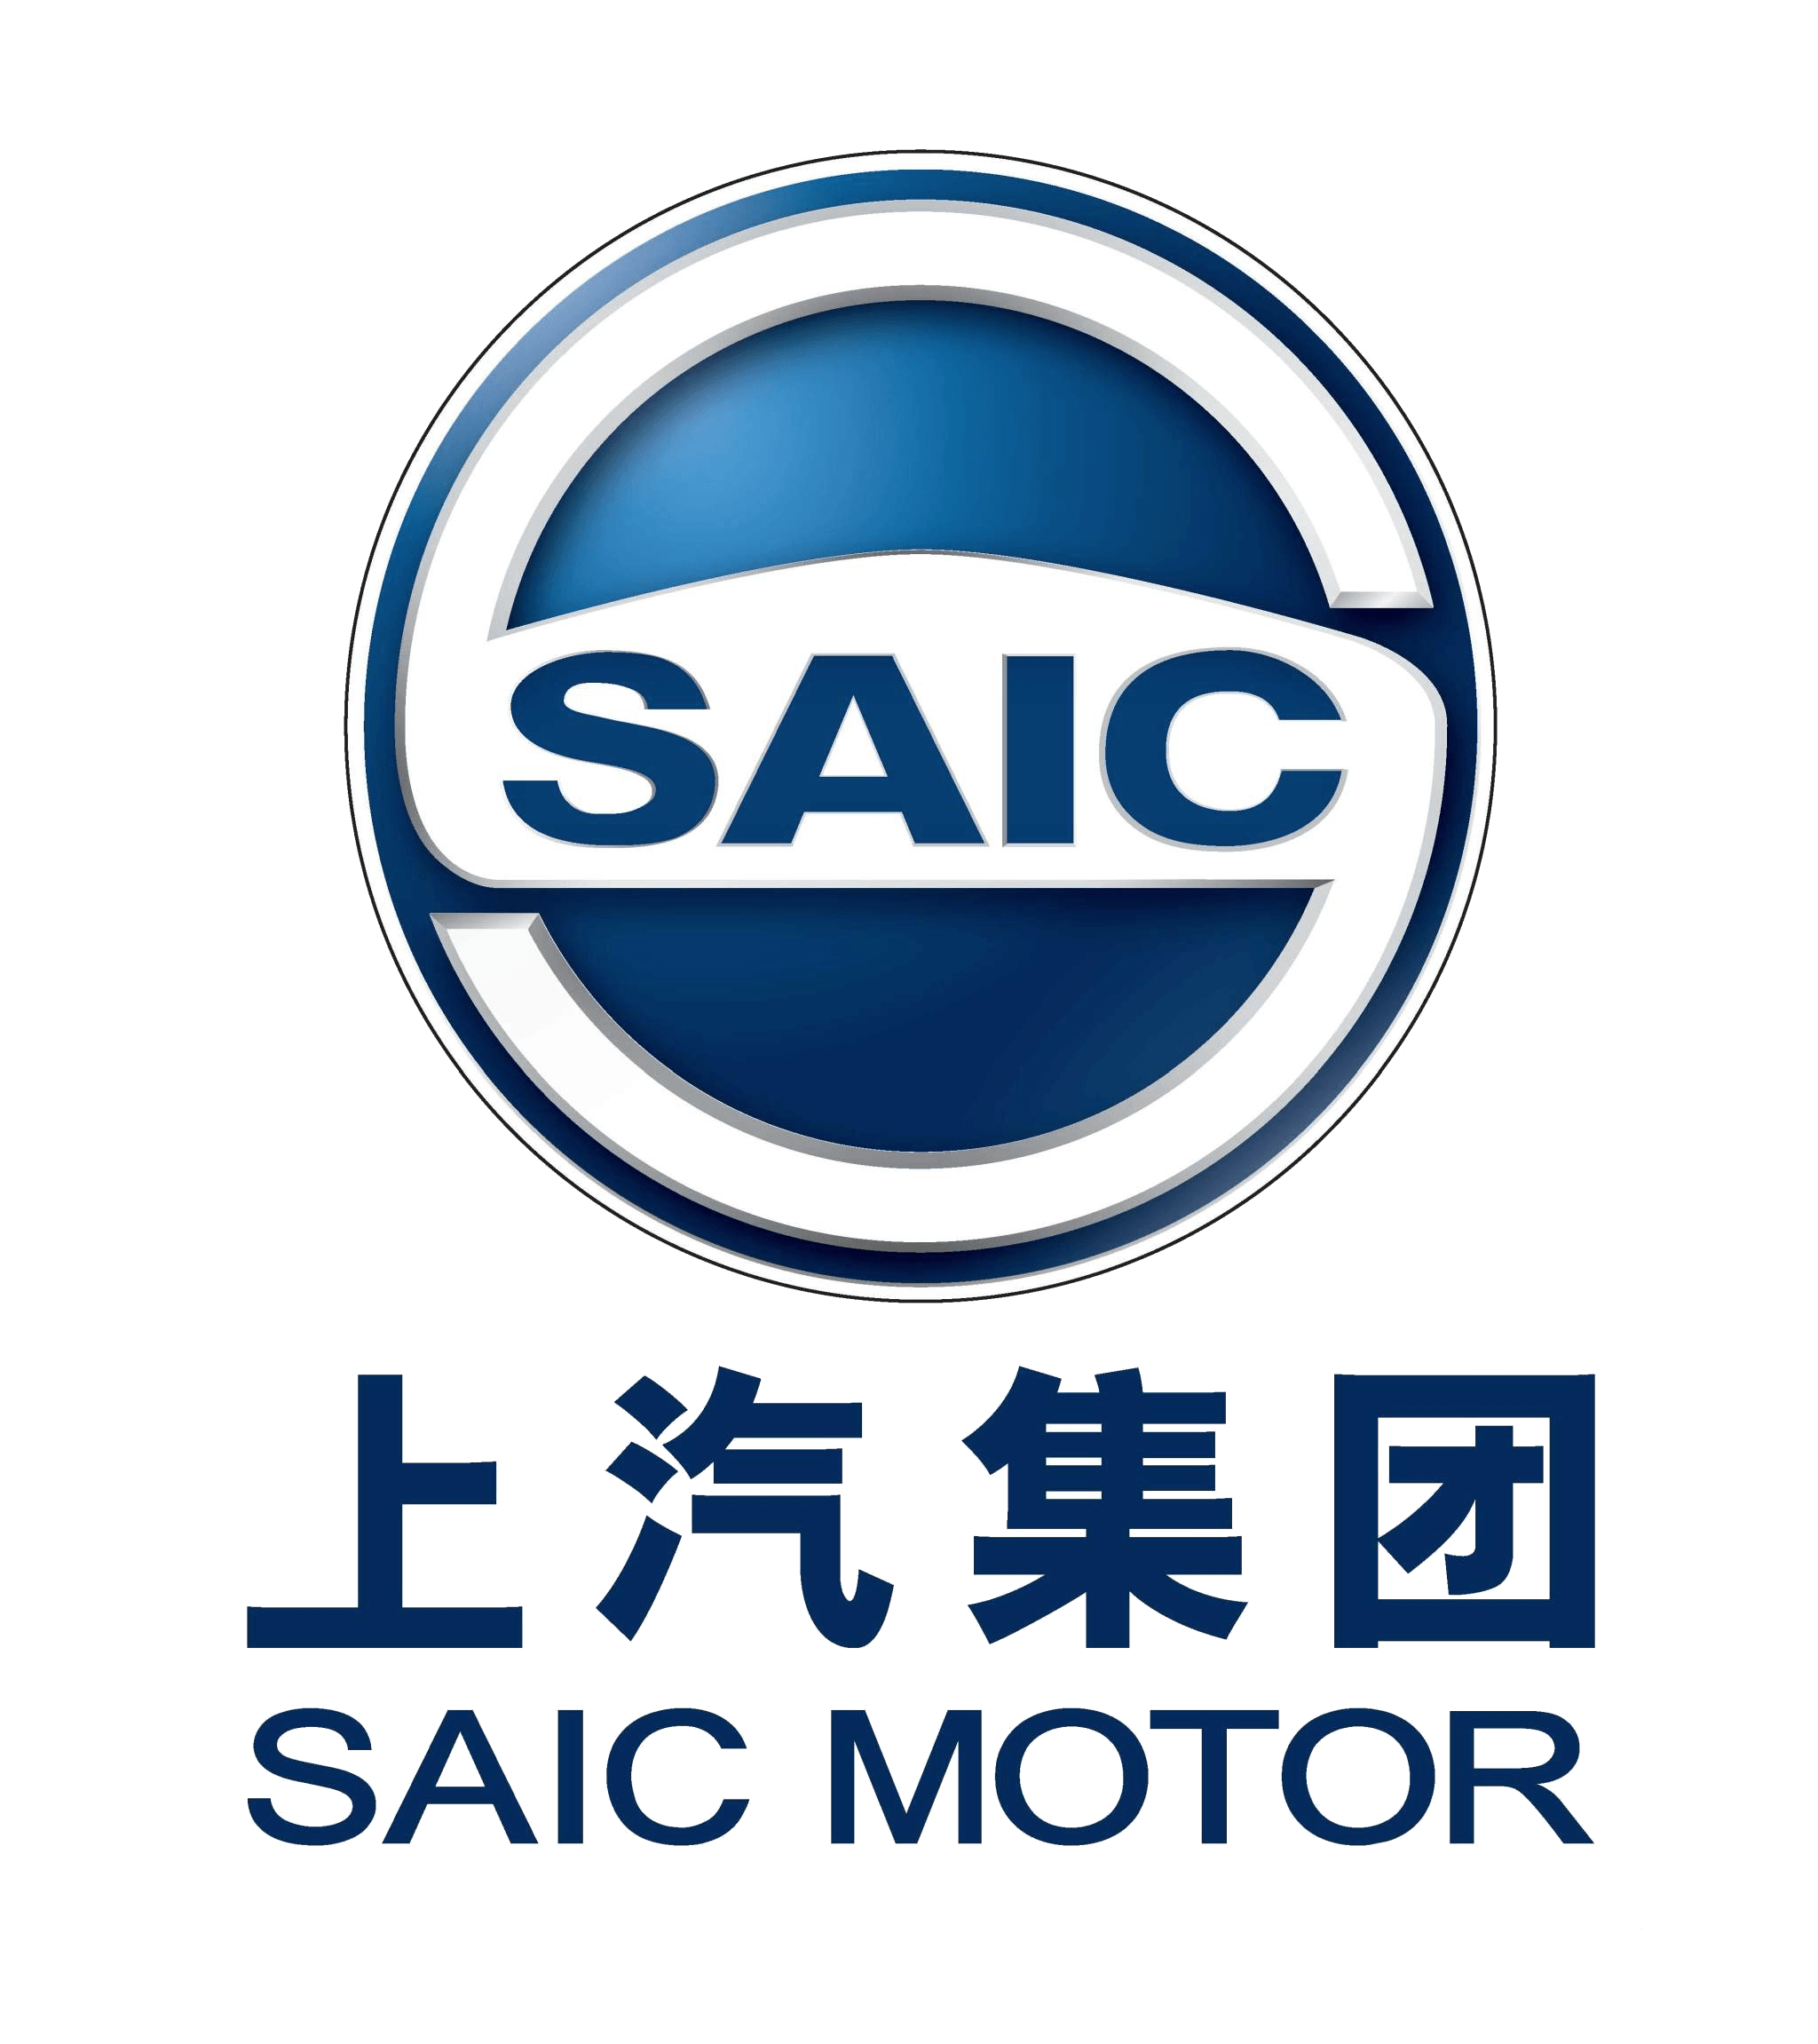 SAIC Logo - File:SAIC Motor logo.png - Wikimedia Commons